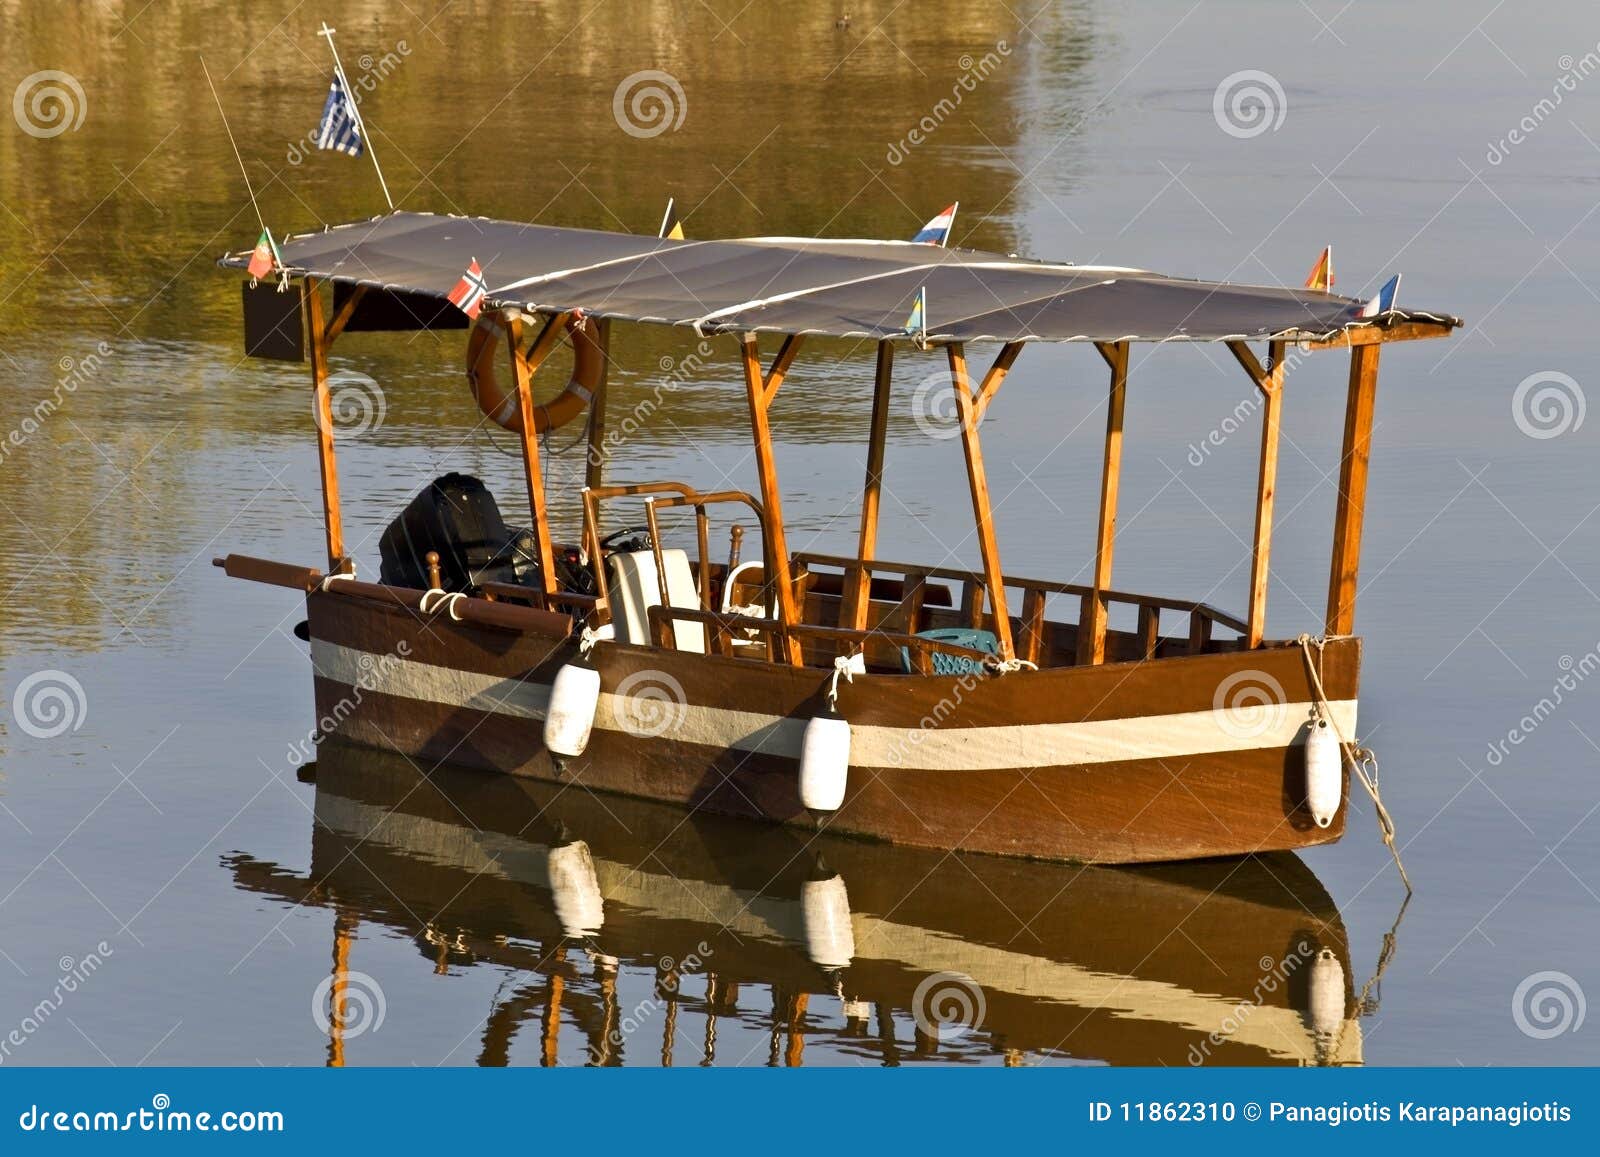 Stock Photo: Wooden old traditional greek boat at lake Kerkini